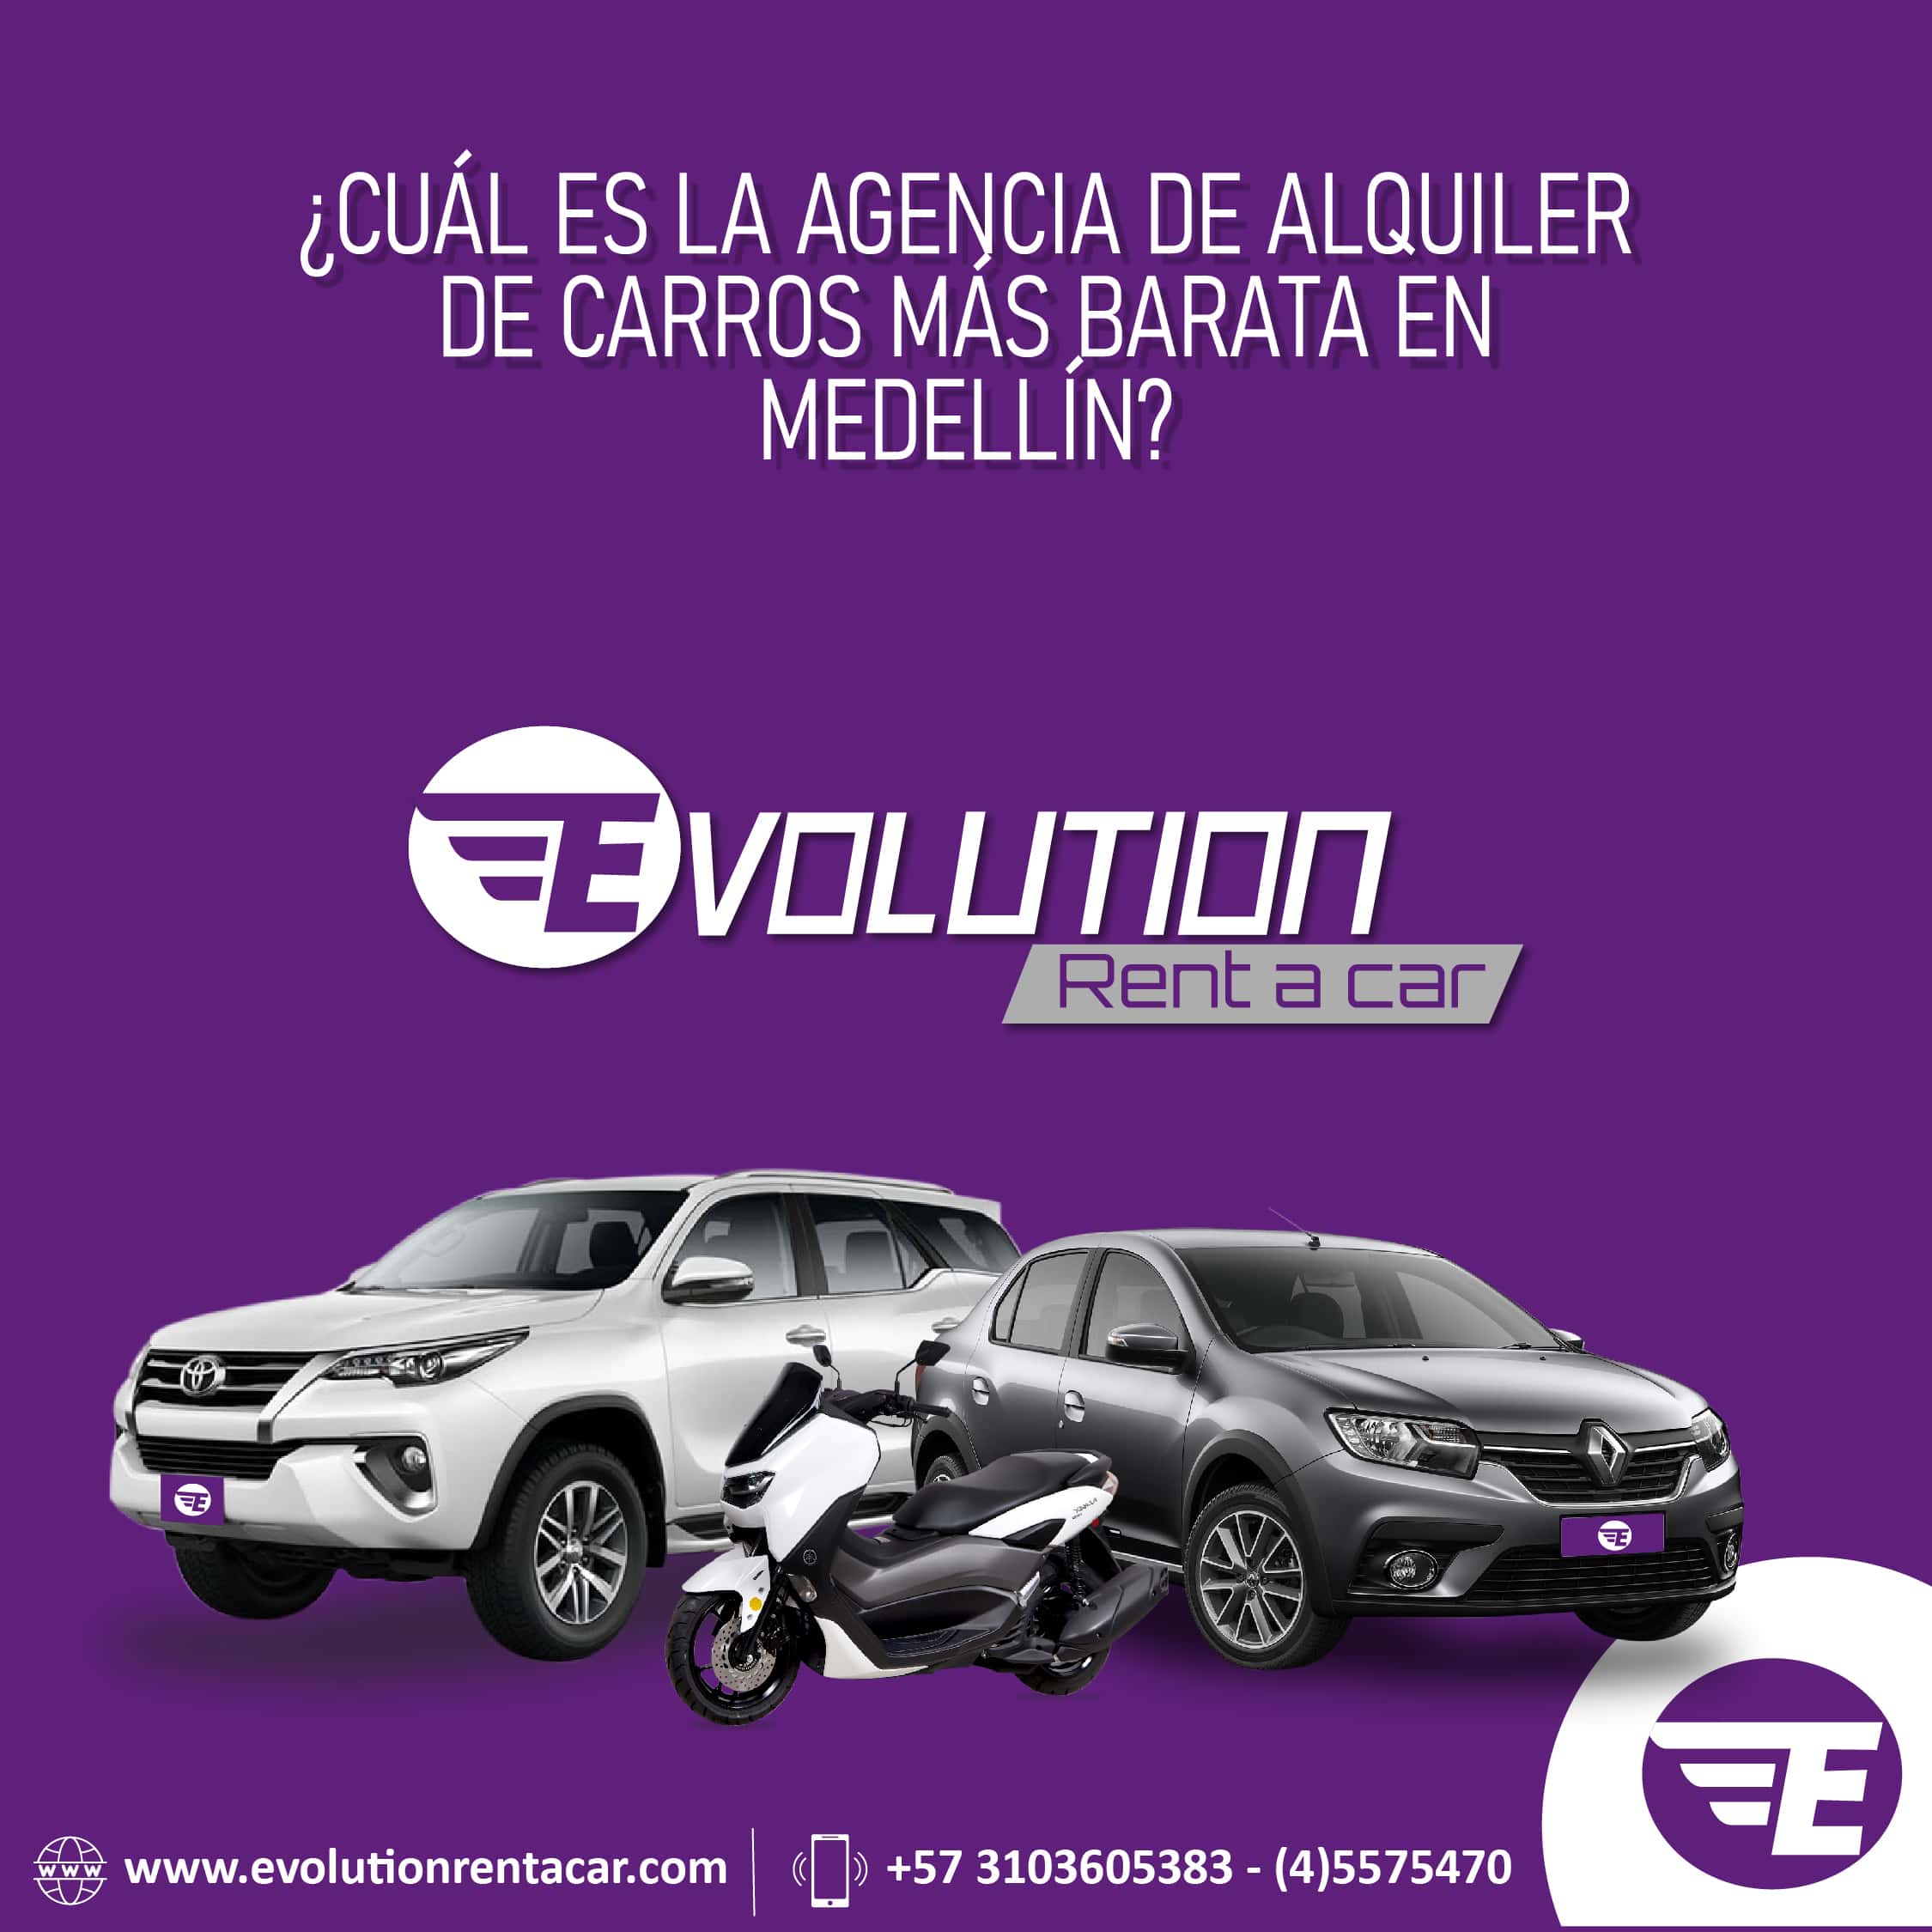 Alquiler de carros en medellin – Agencia Evolution Rent A Car